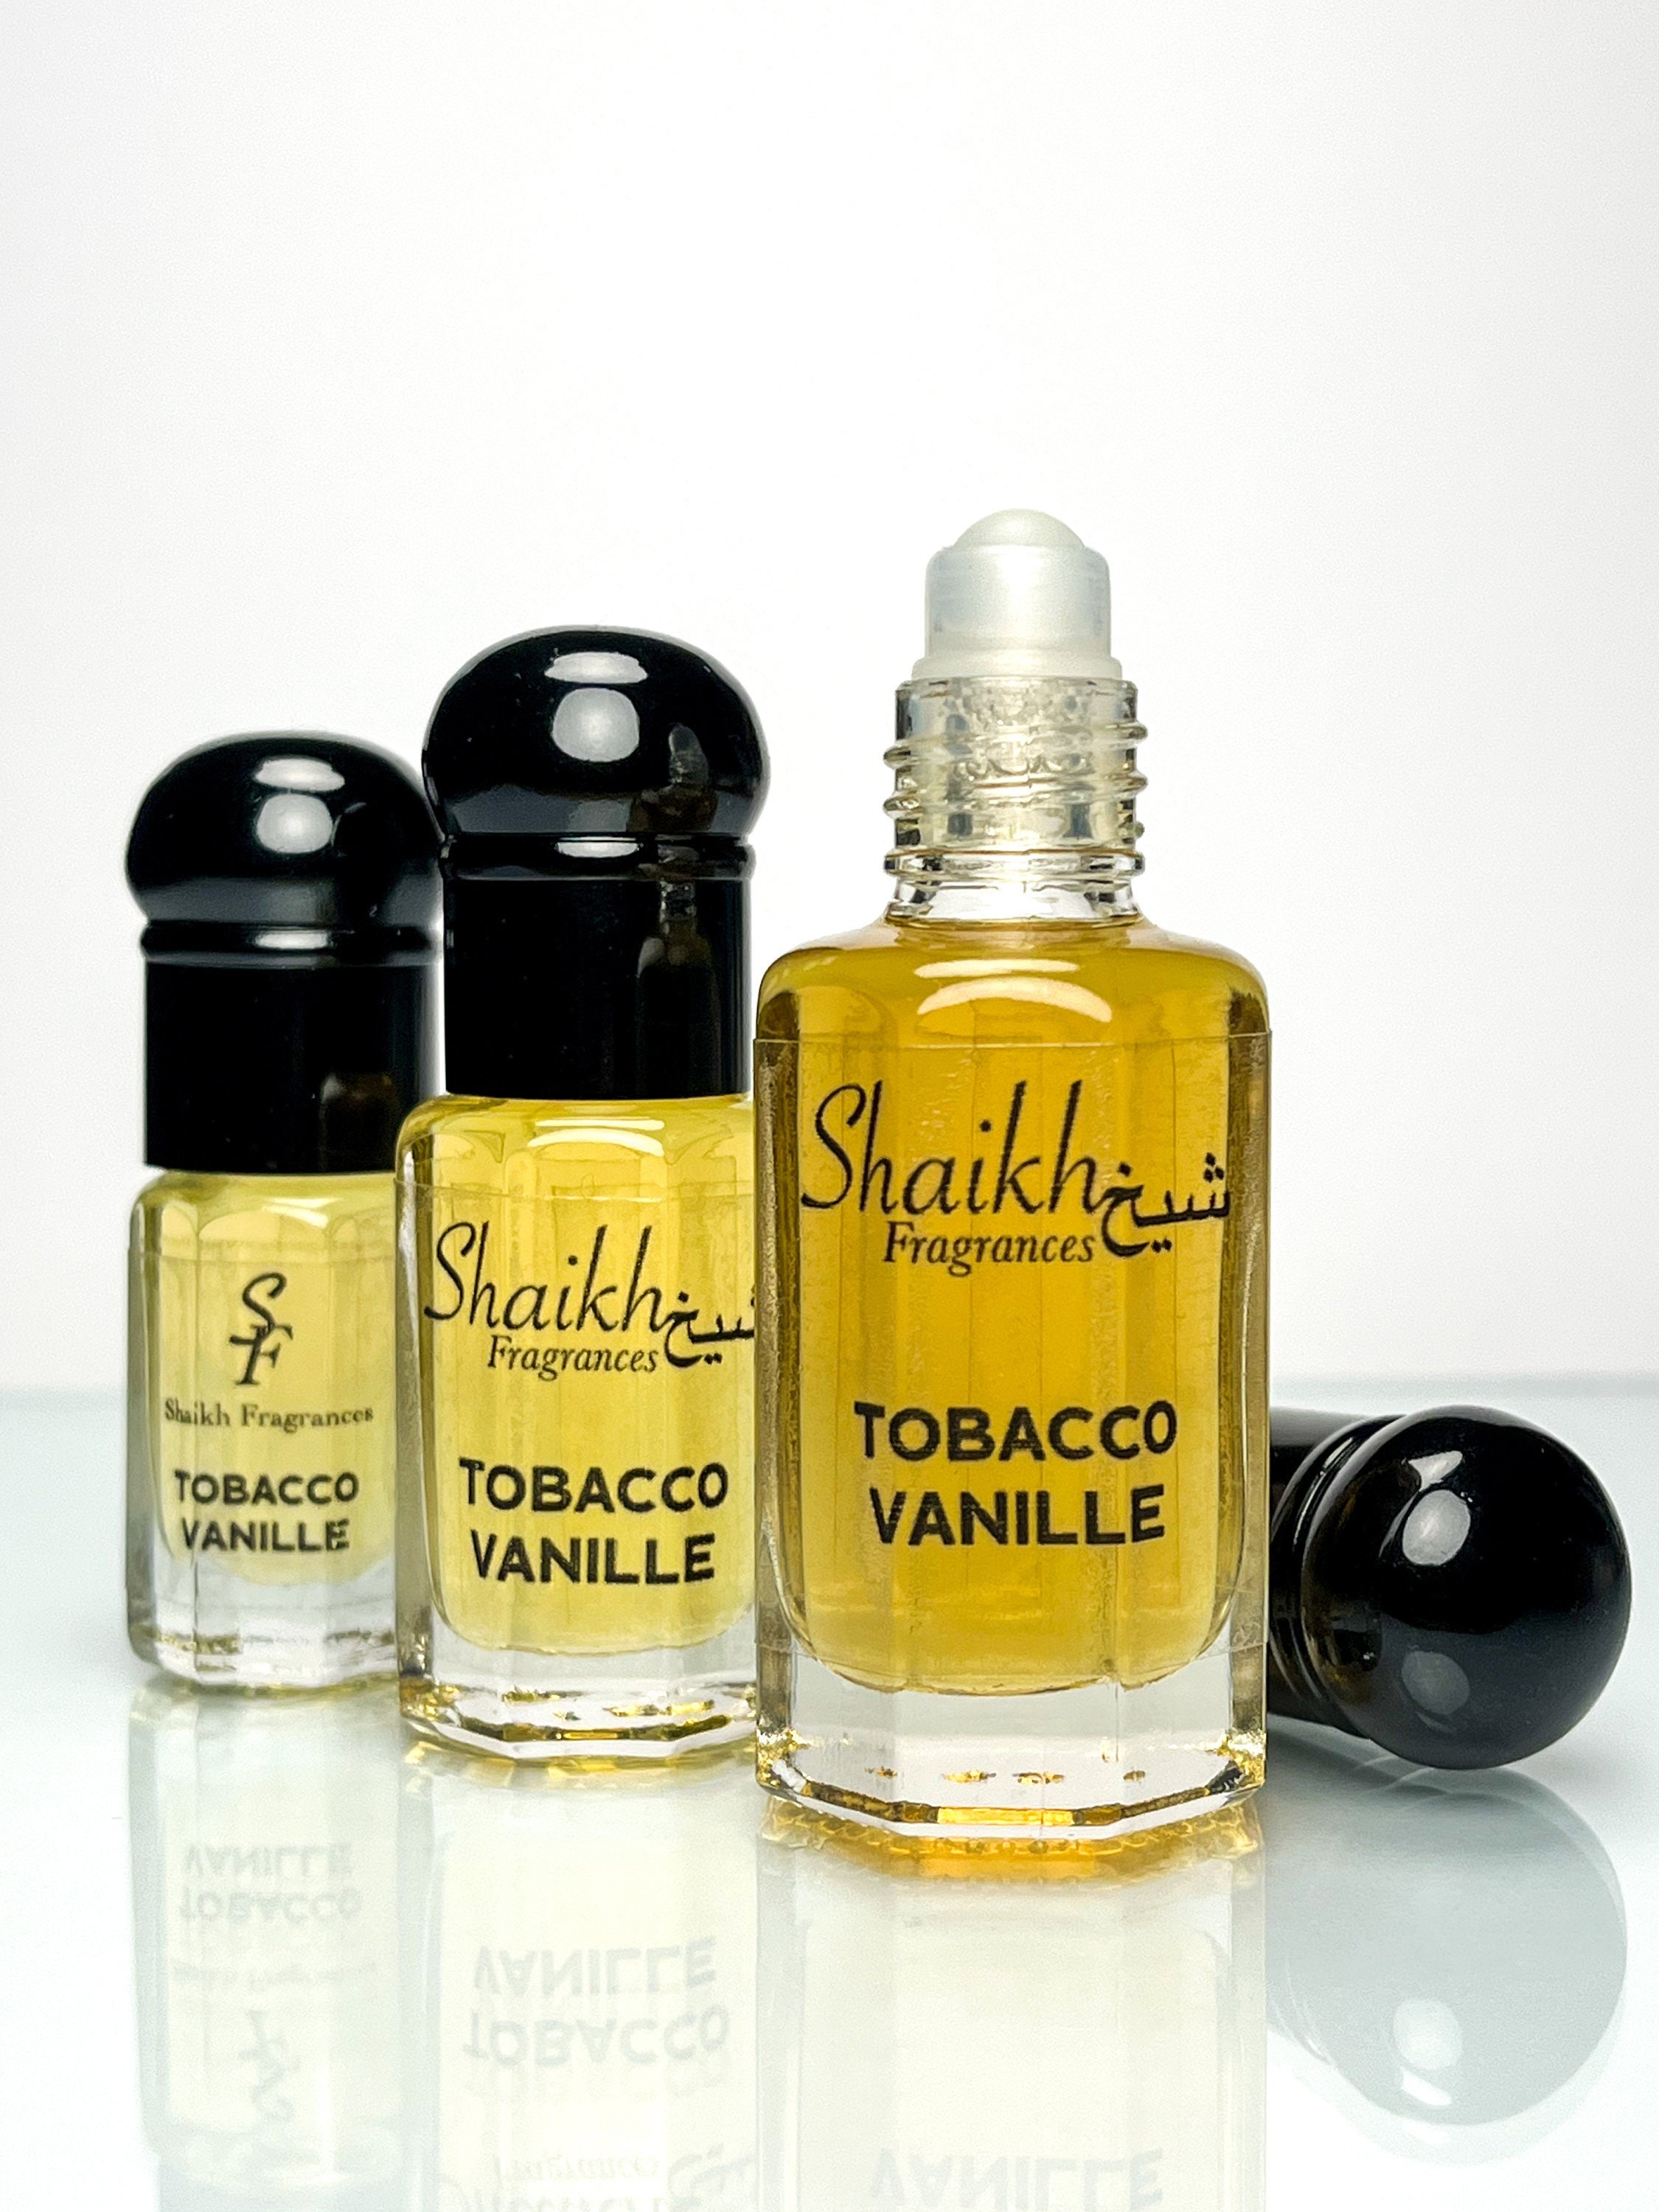 Buy Tobacco Vanilla Fragrance Oil Online at Best Price